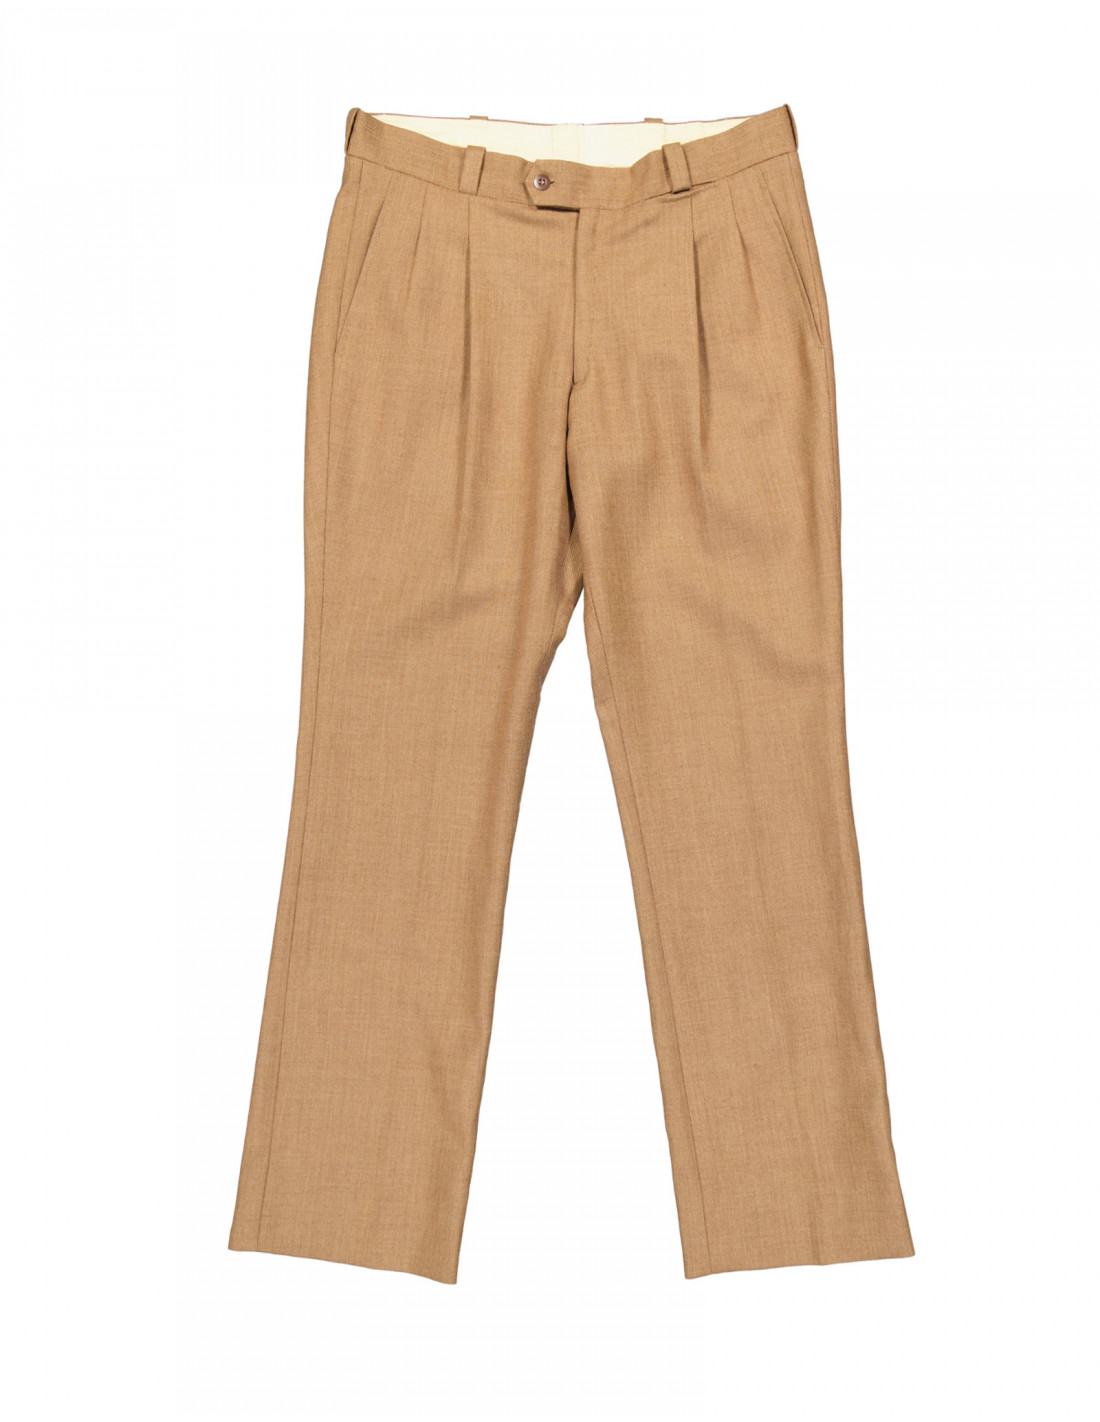 Men Vintage Corduroy Gurkha Trousers High Waist Straight Pleated Naples  Pants | eBay